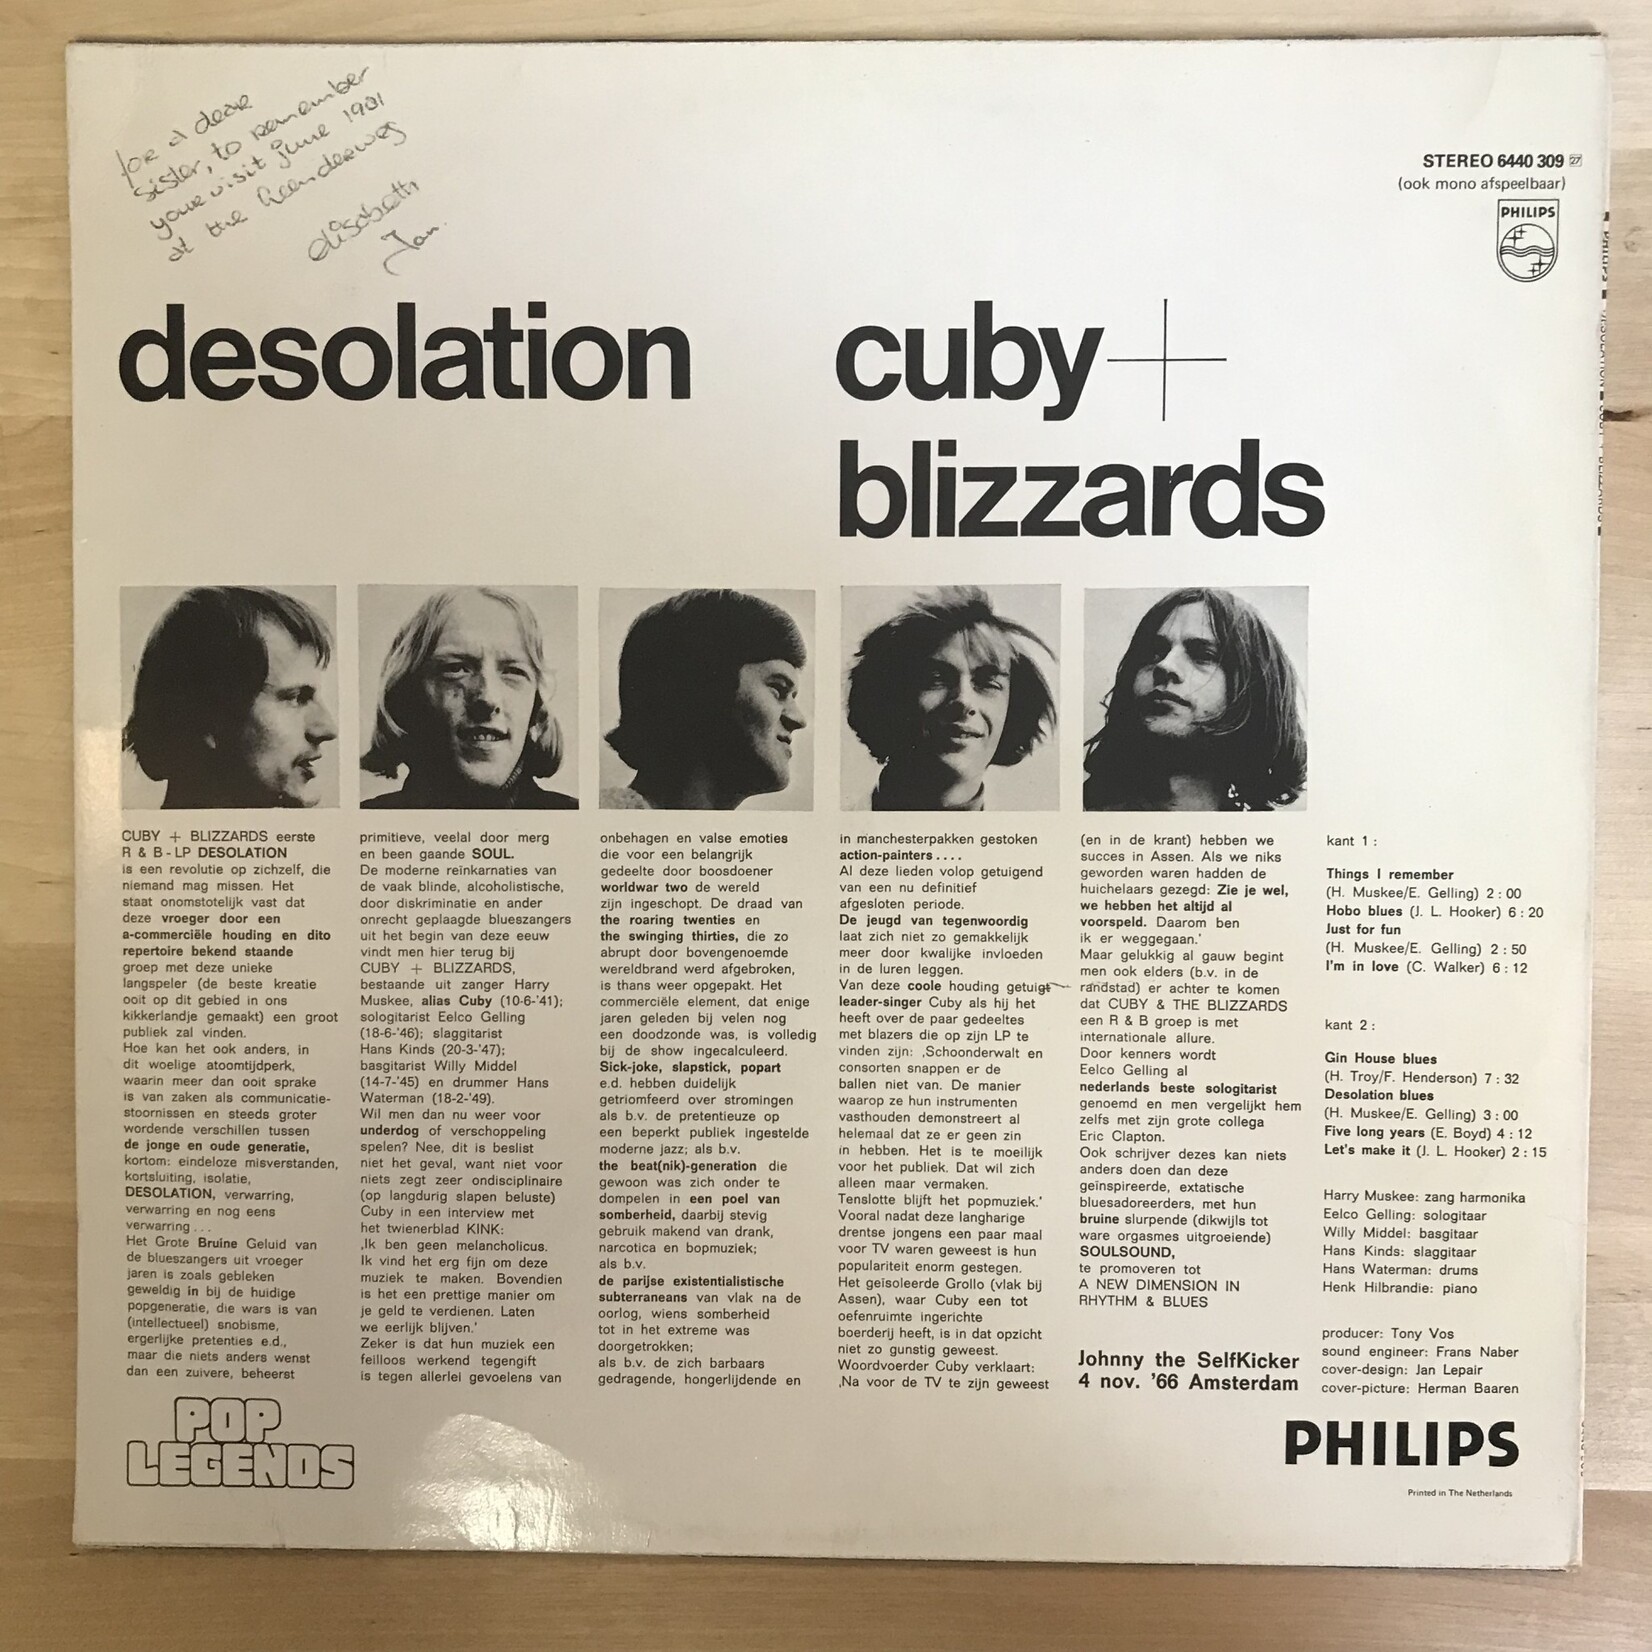 Cuby + Blizzards - Desolation - 6440 309 - Vinyl LP (USED)